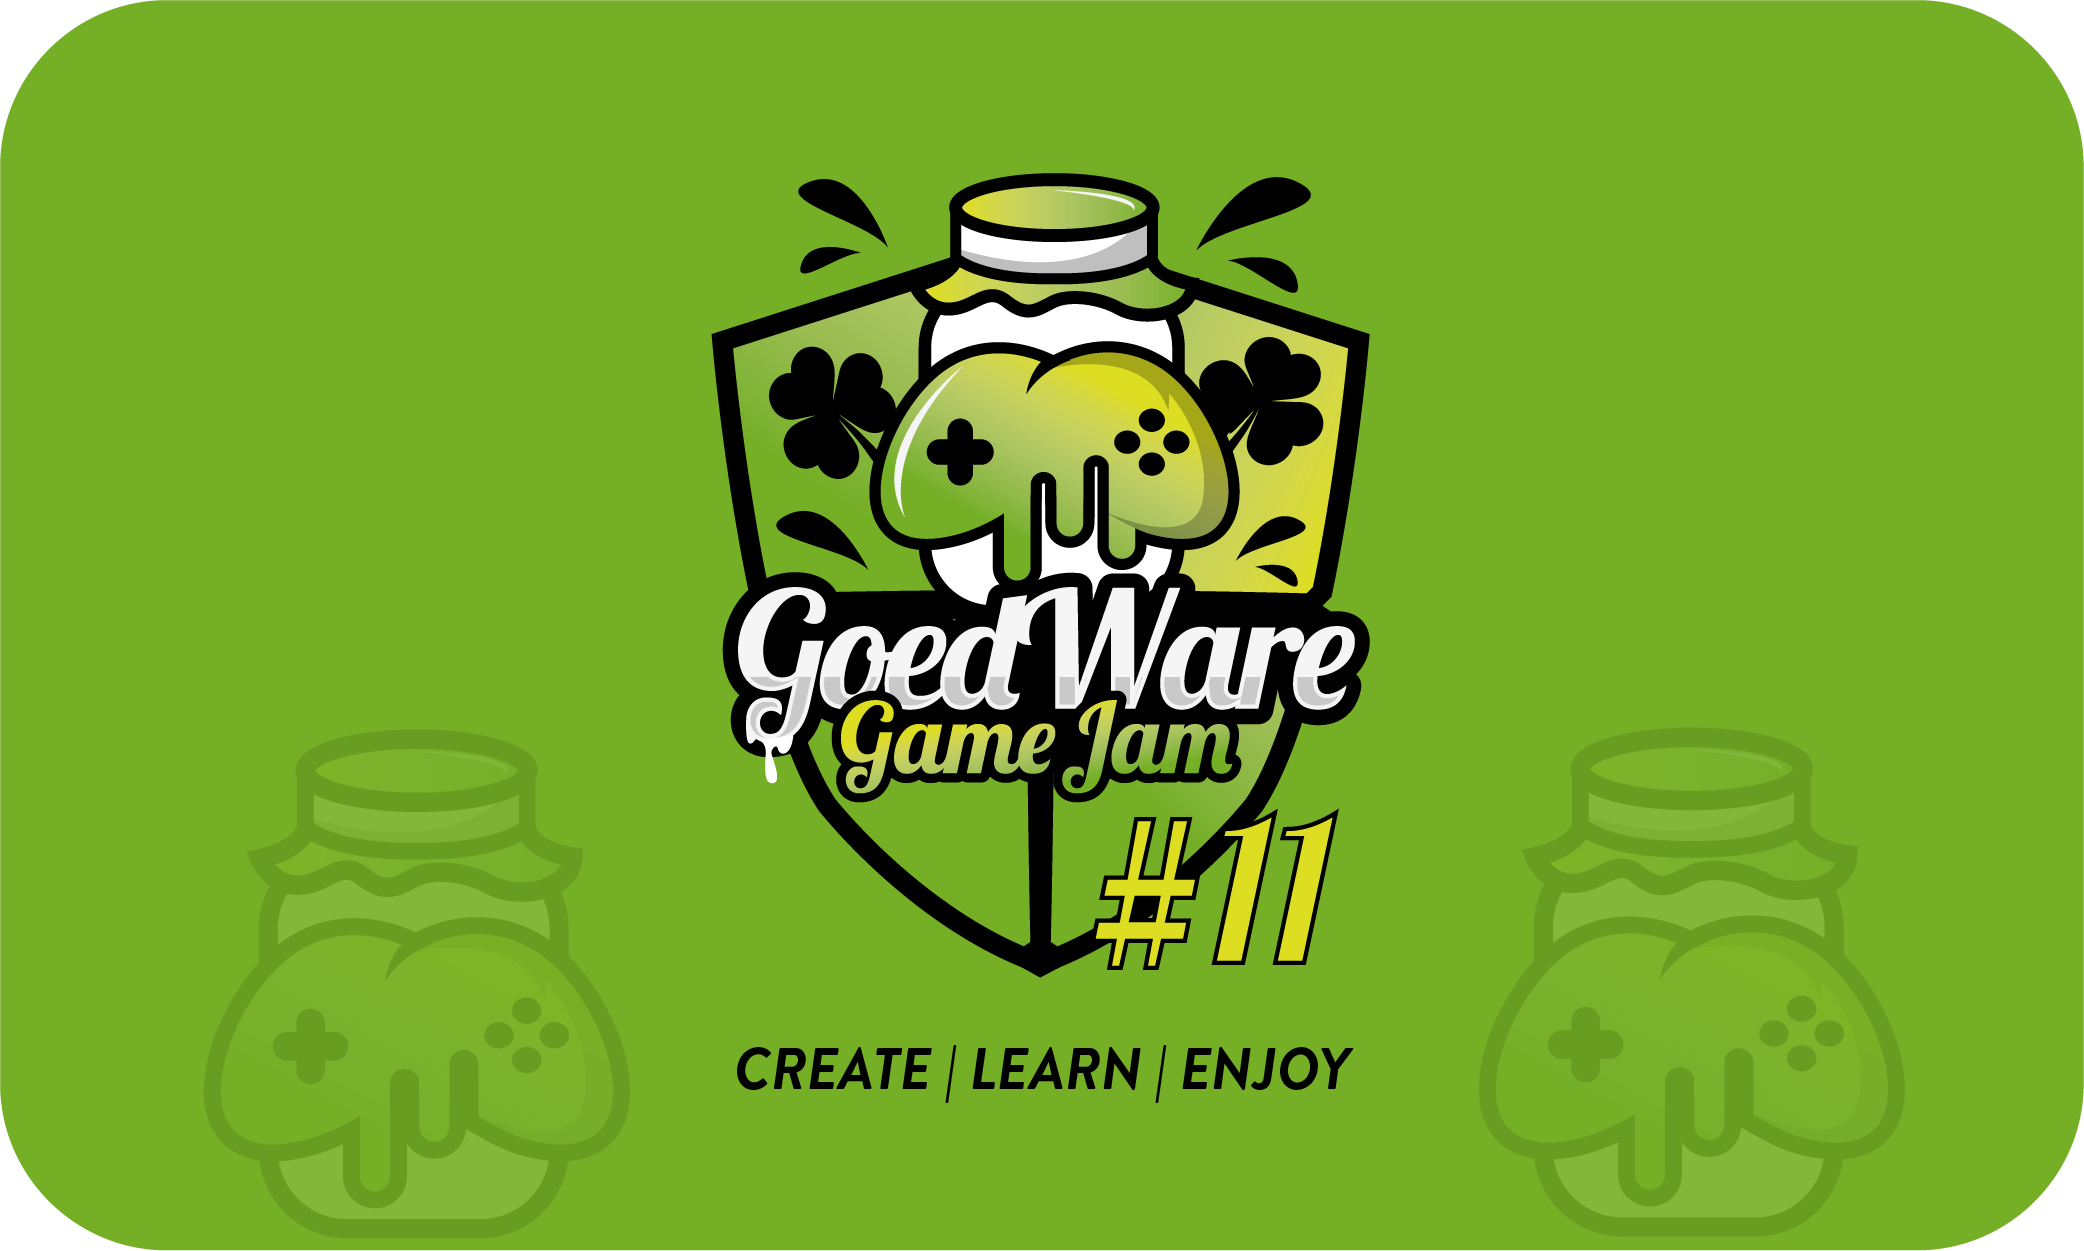 GoedWare Game Jam #11